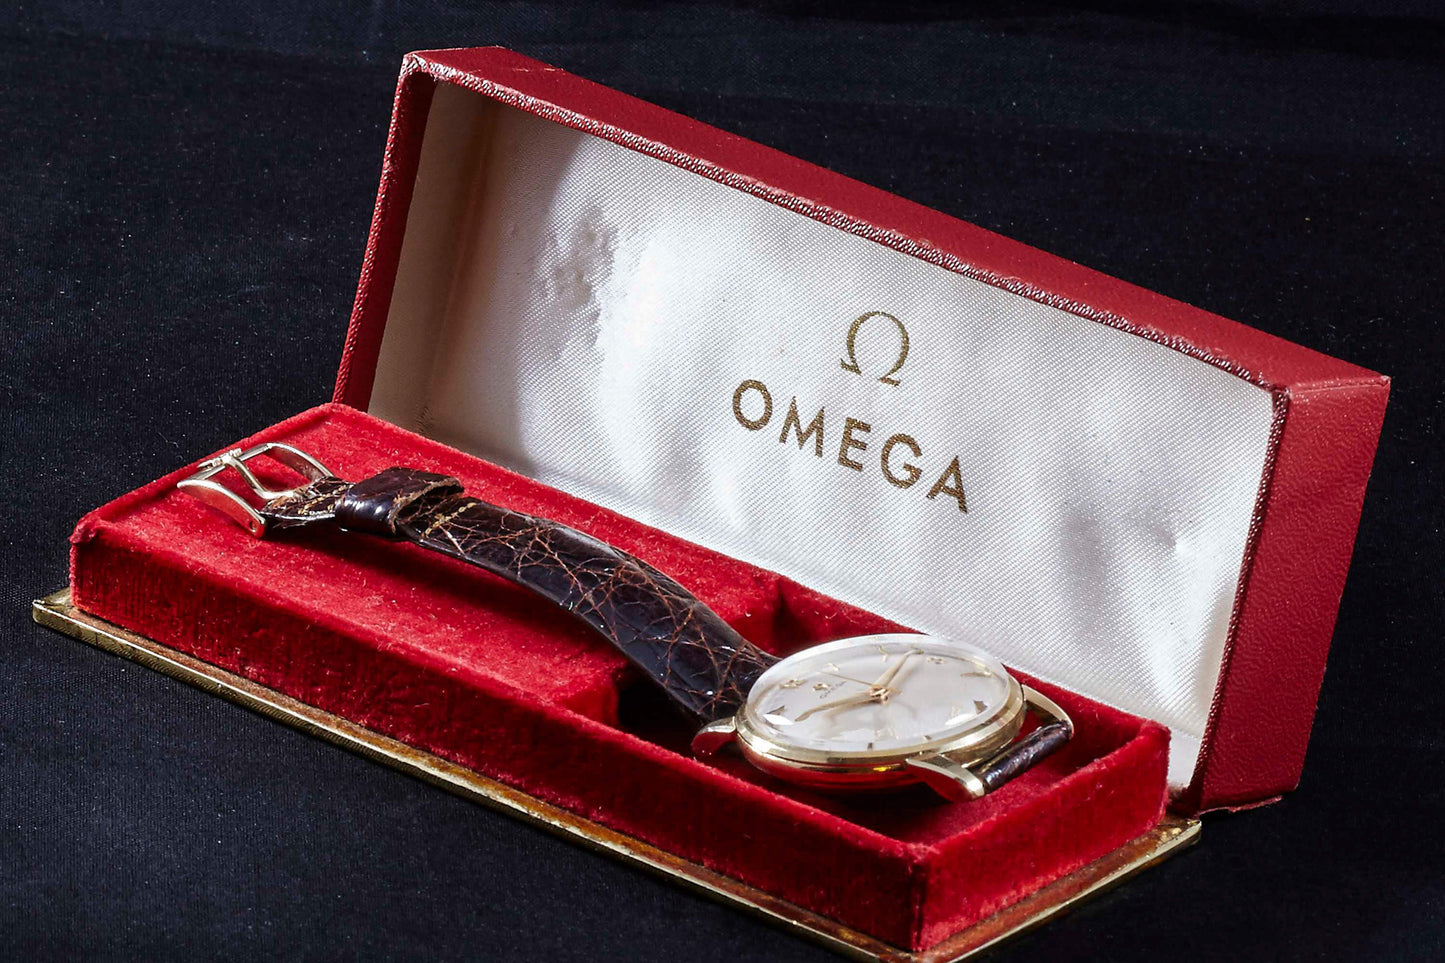 Omega 14K Dress Watch